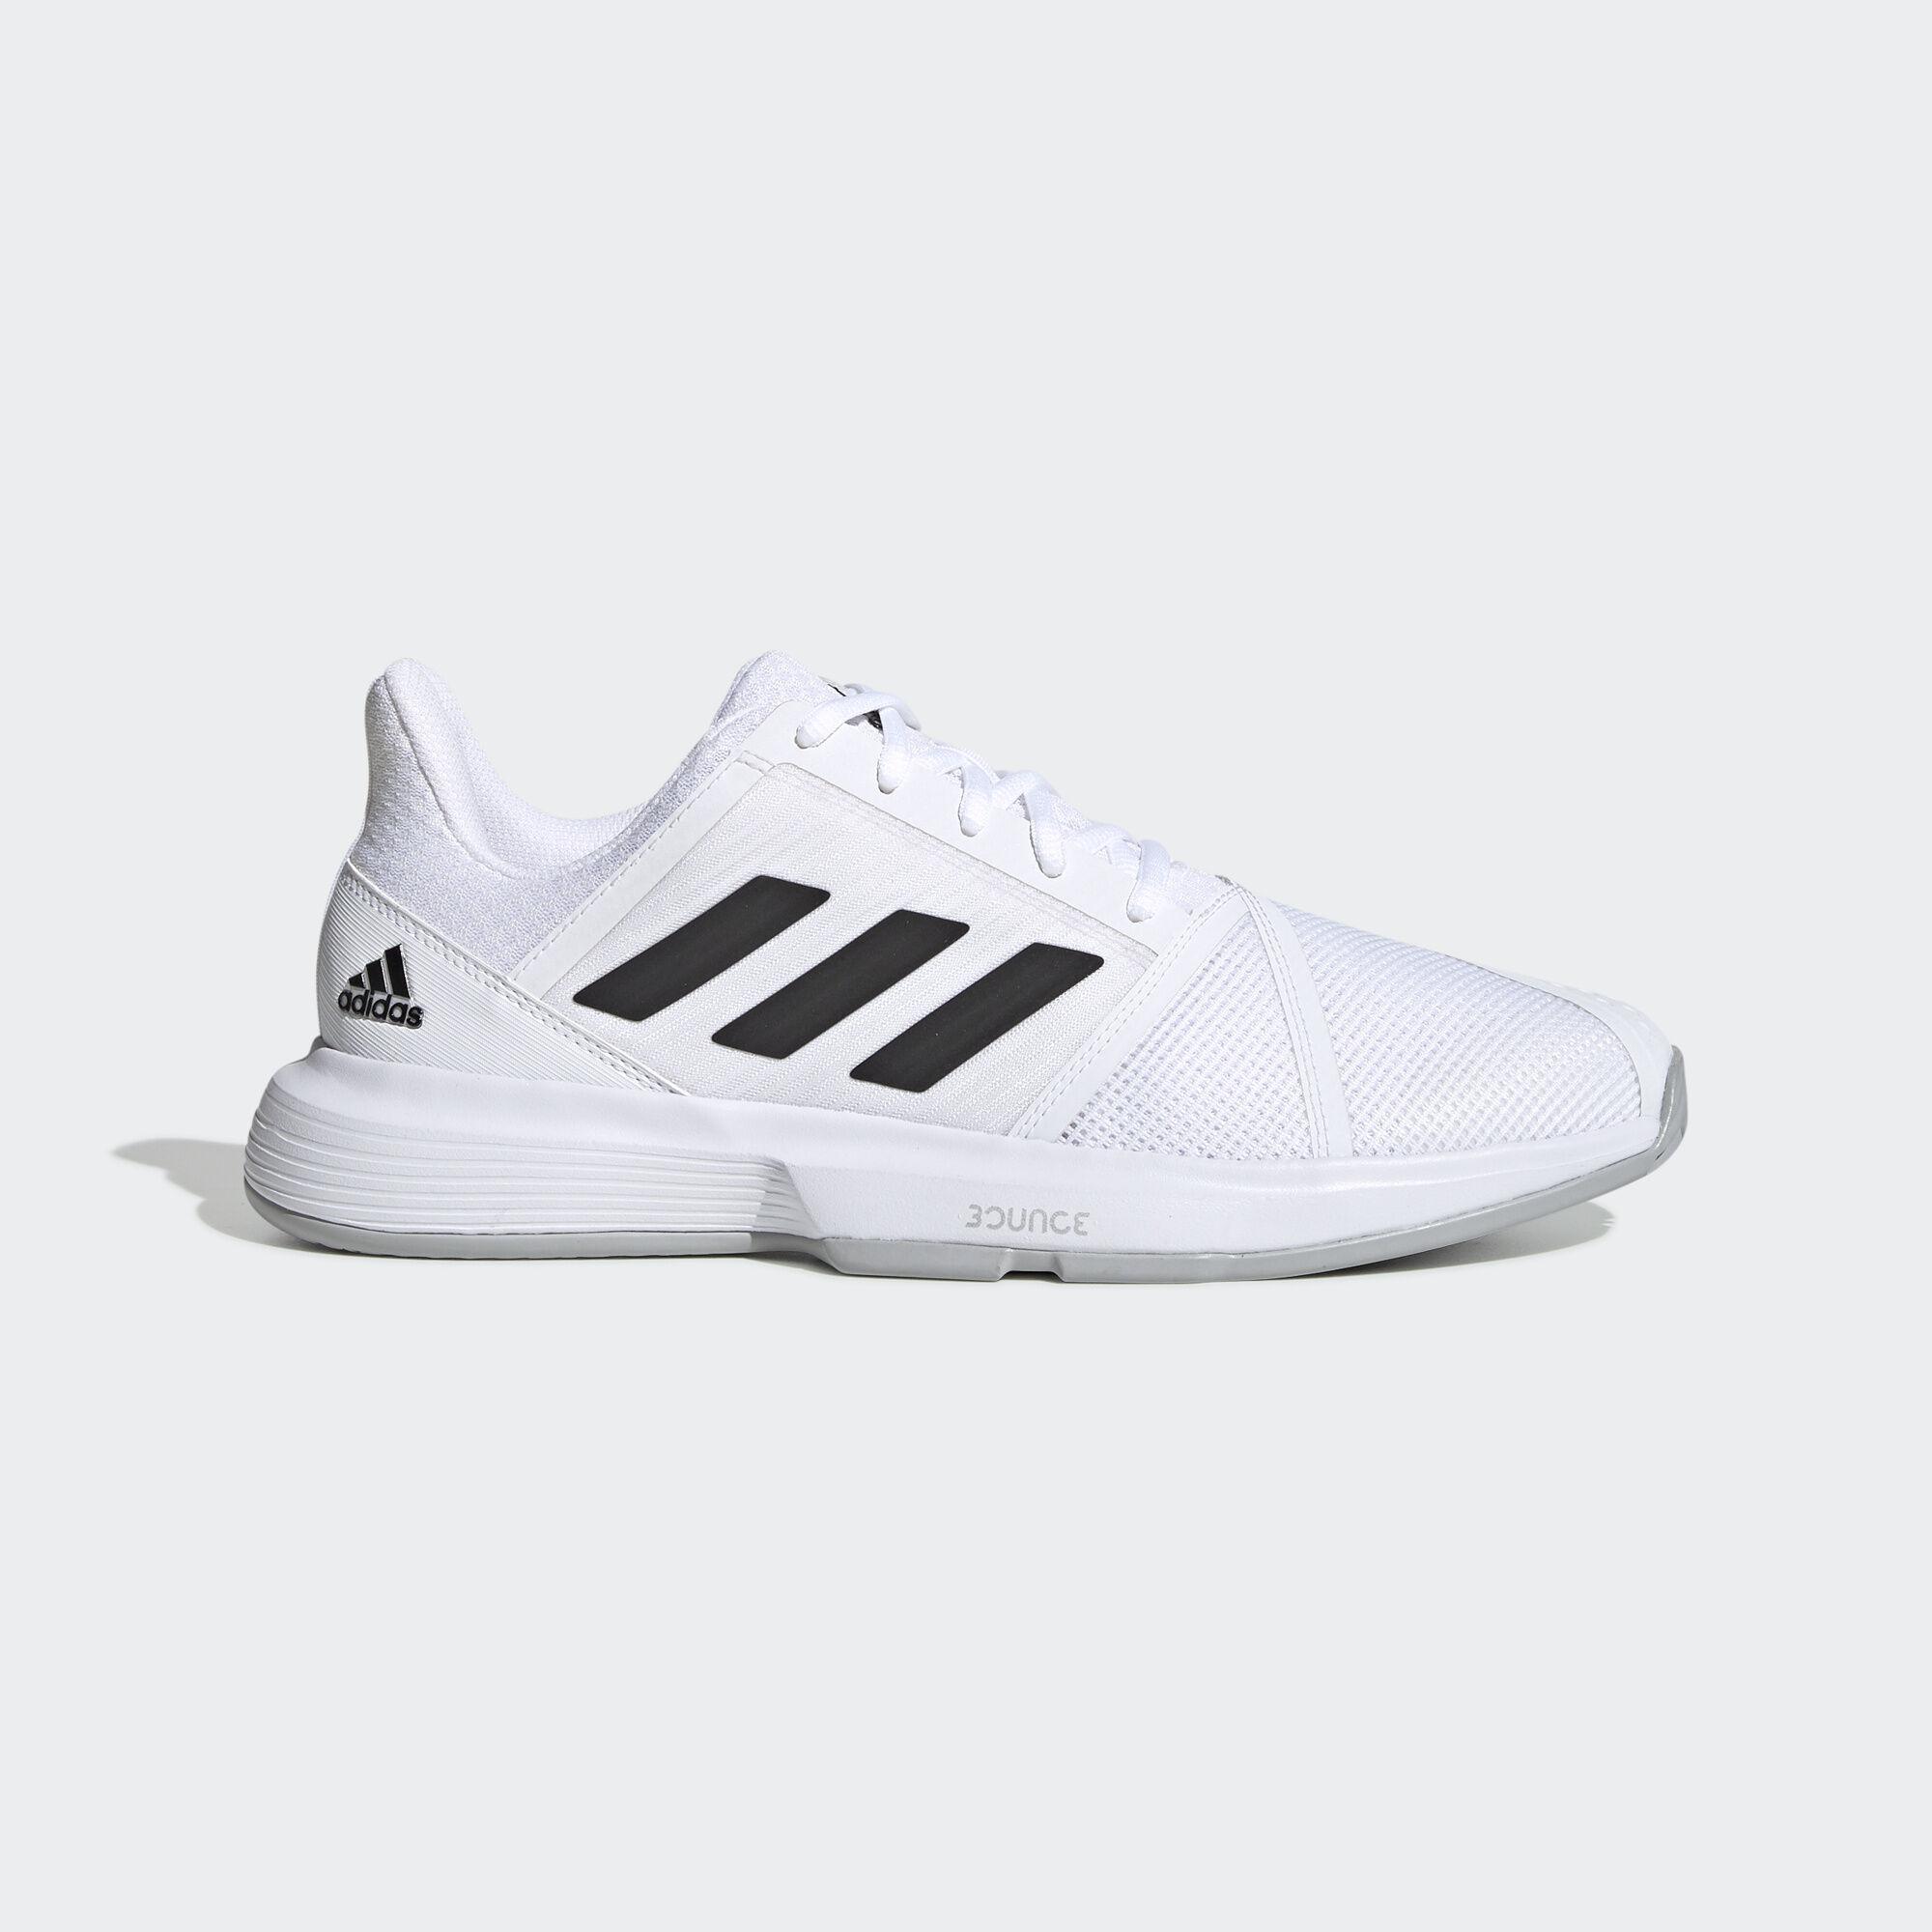 Adidas Mens CourtJam Bounce Tennis Shoes - White/Black - Tennisnuts.com